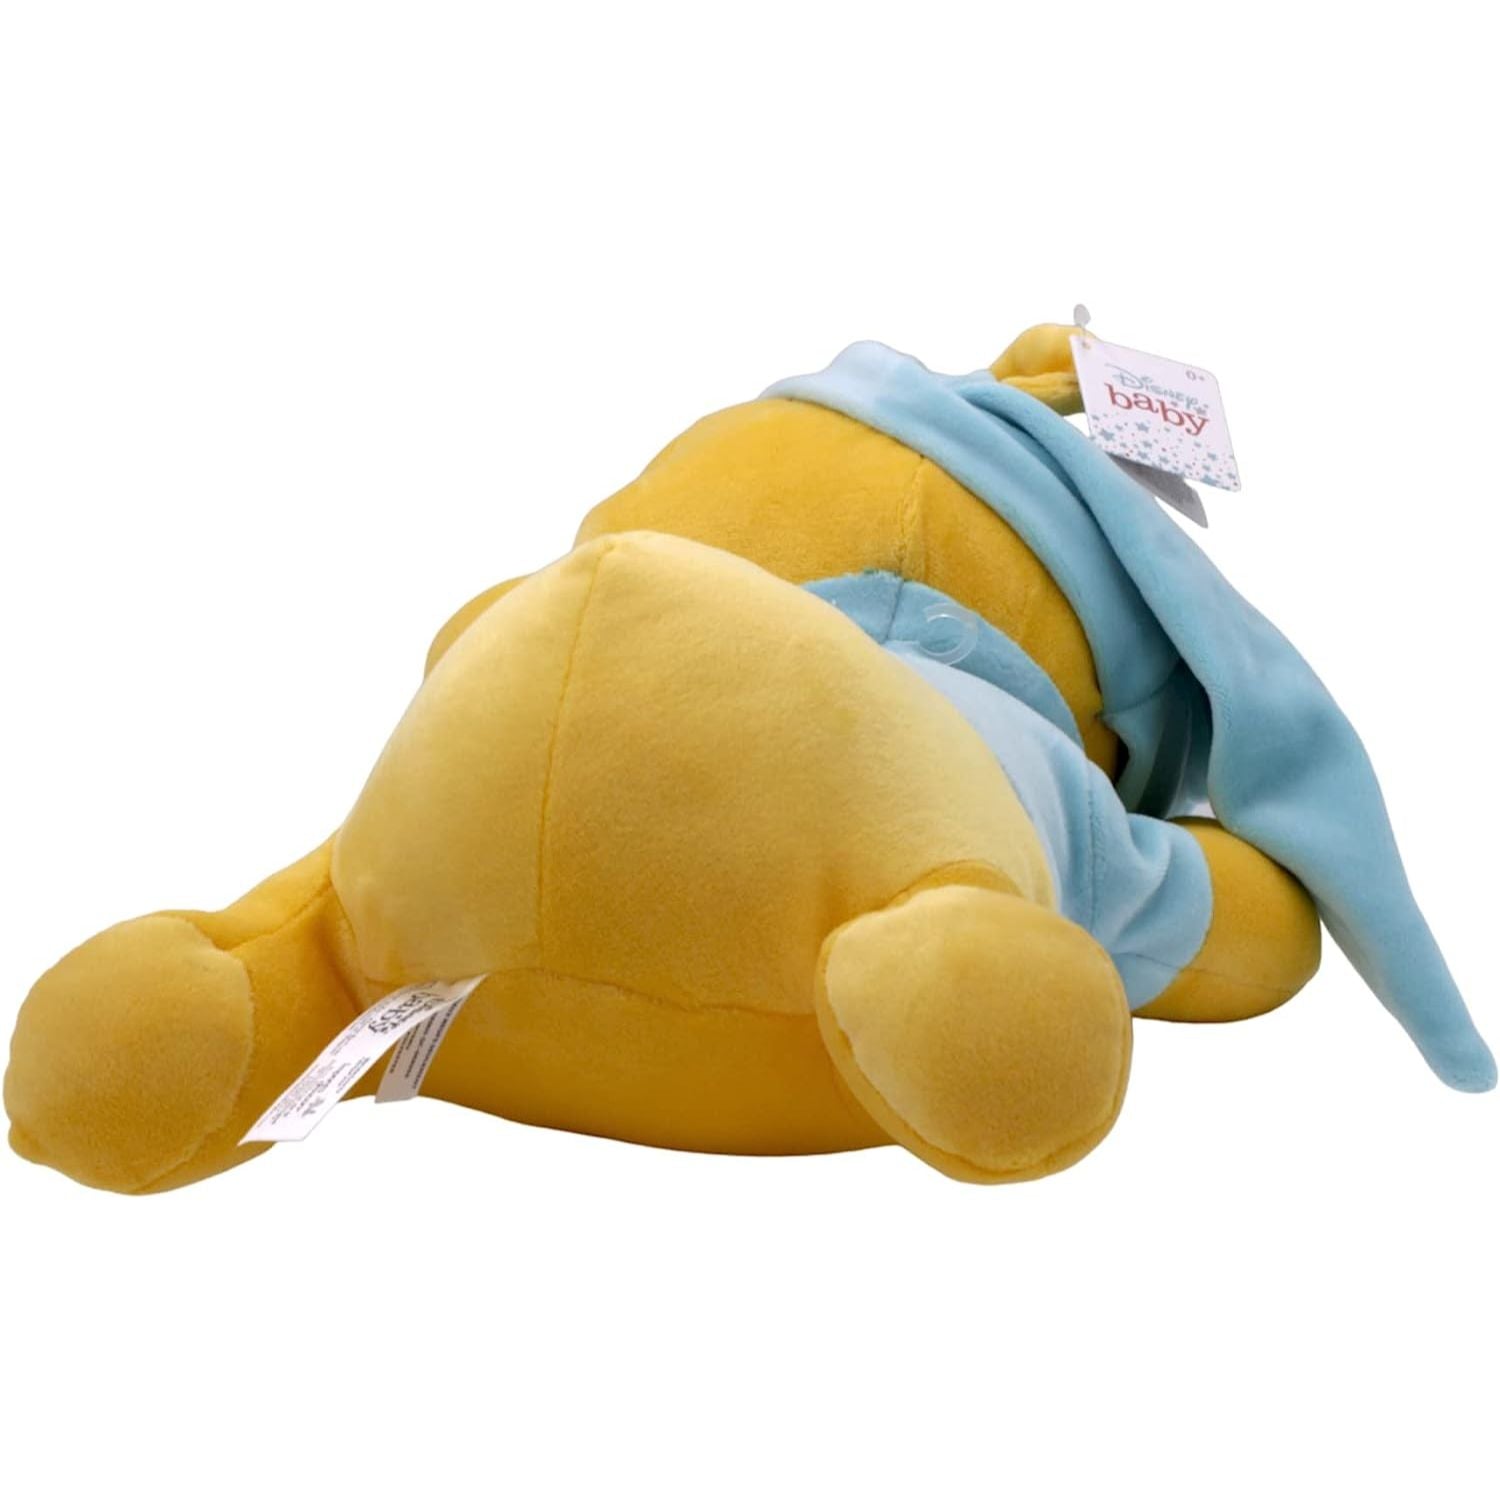 Sleeping Babies - Winnie with Sleeping Hat Plush Toy - Heretoserveyou